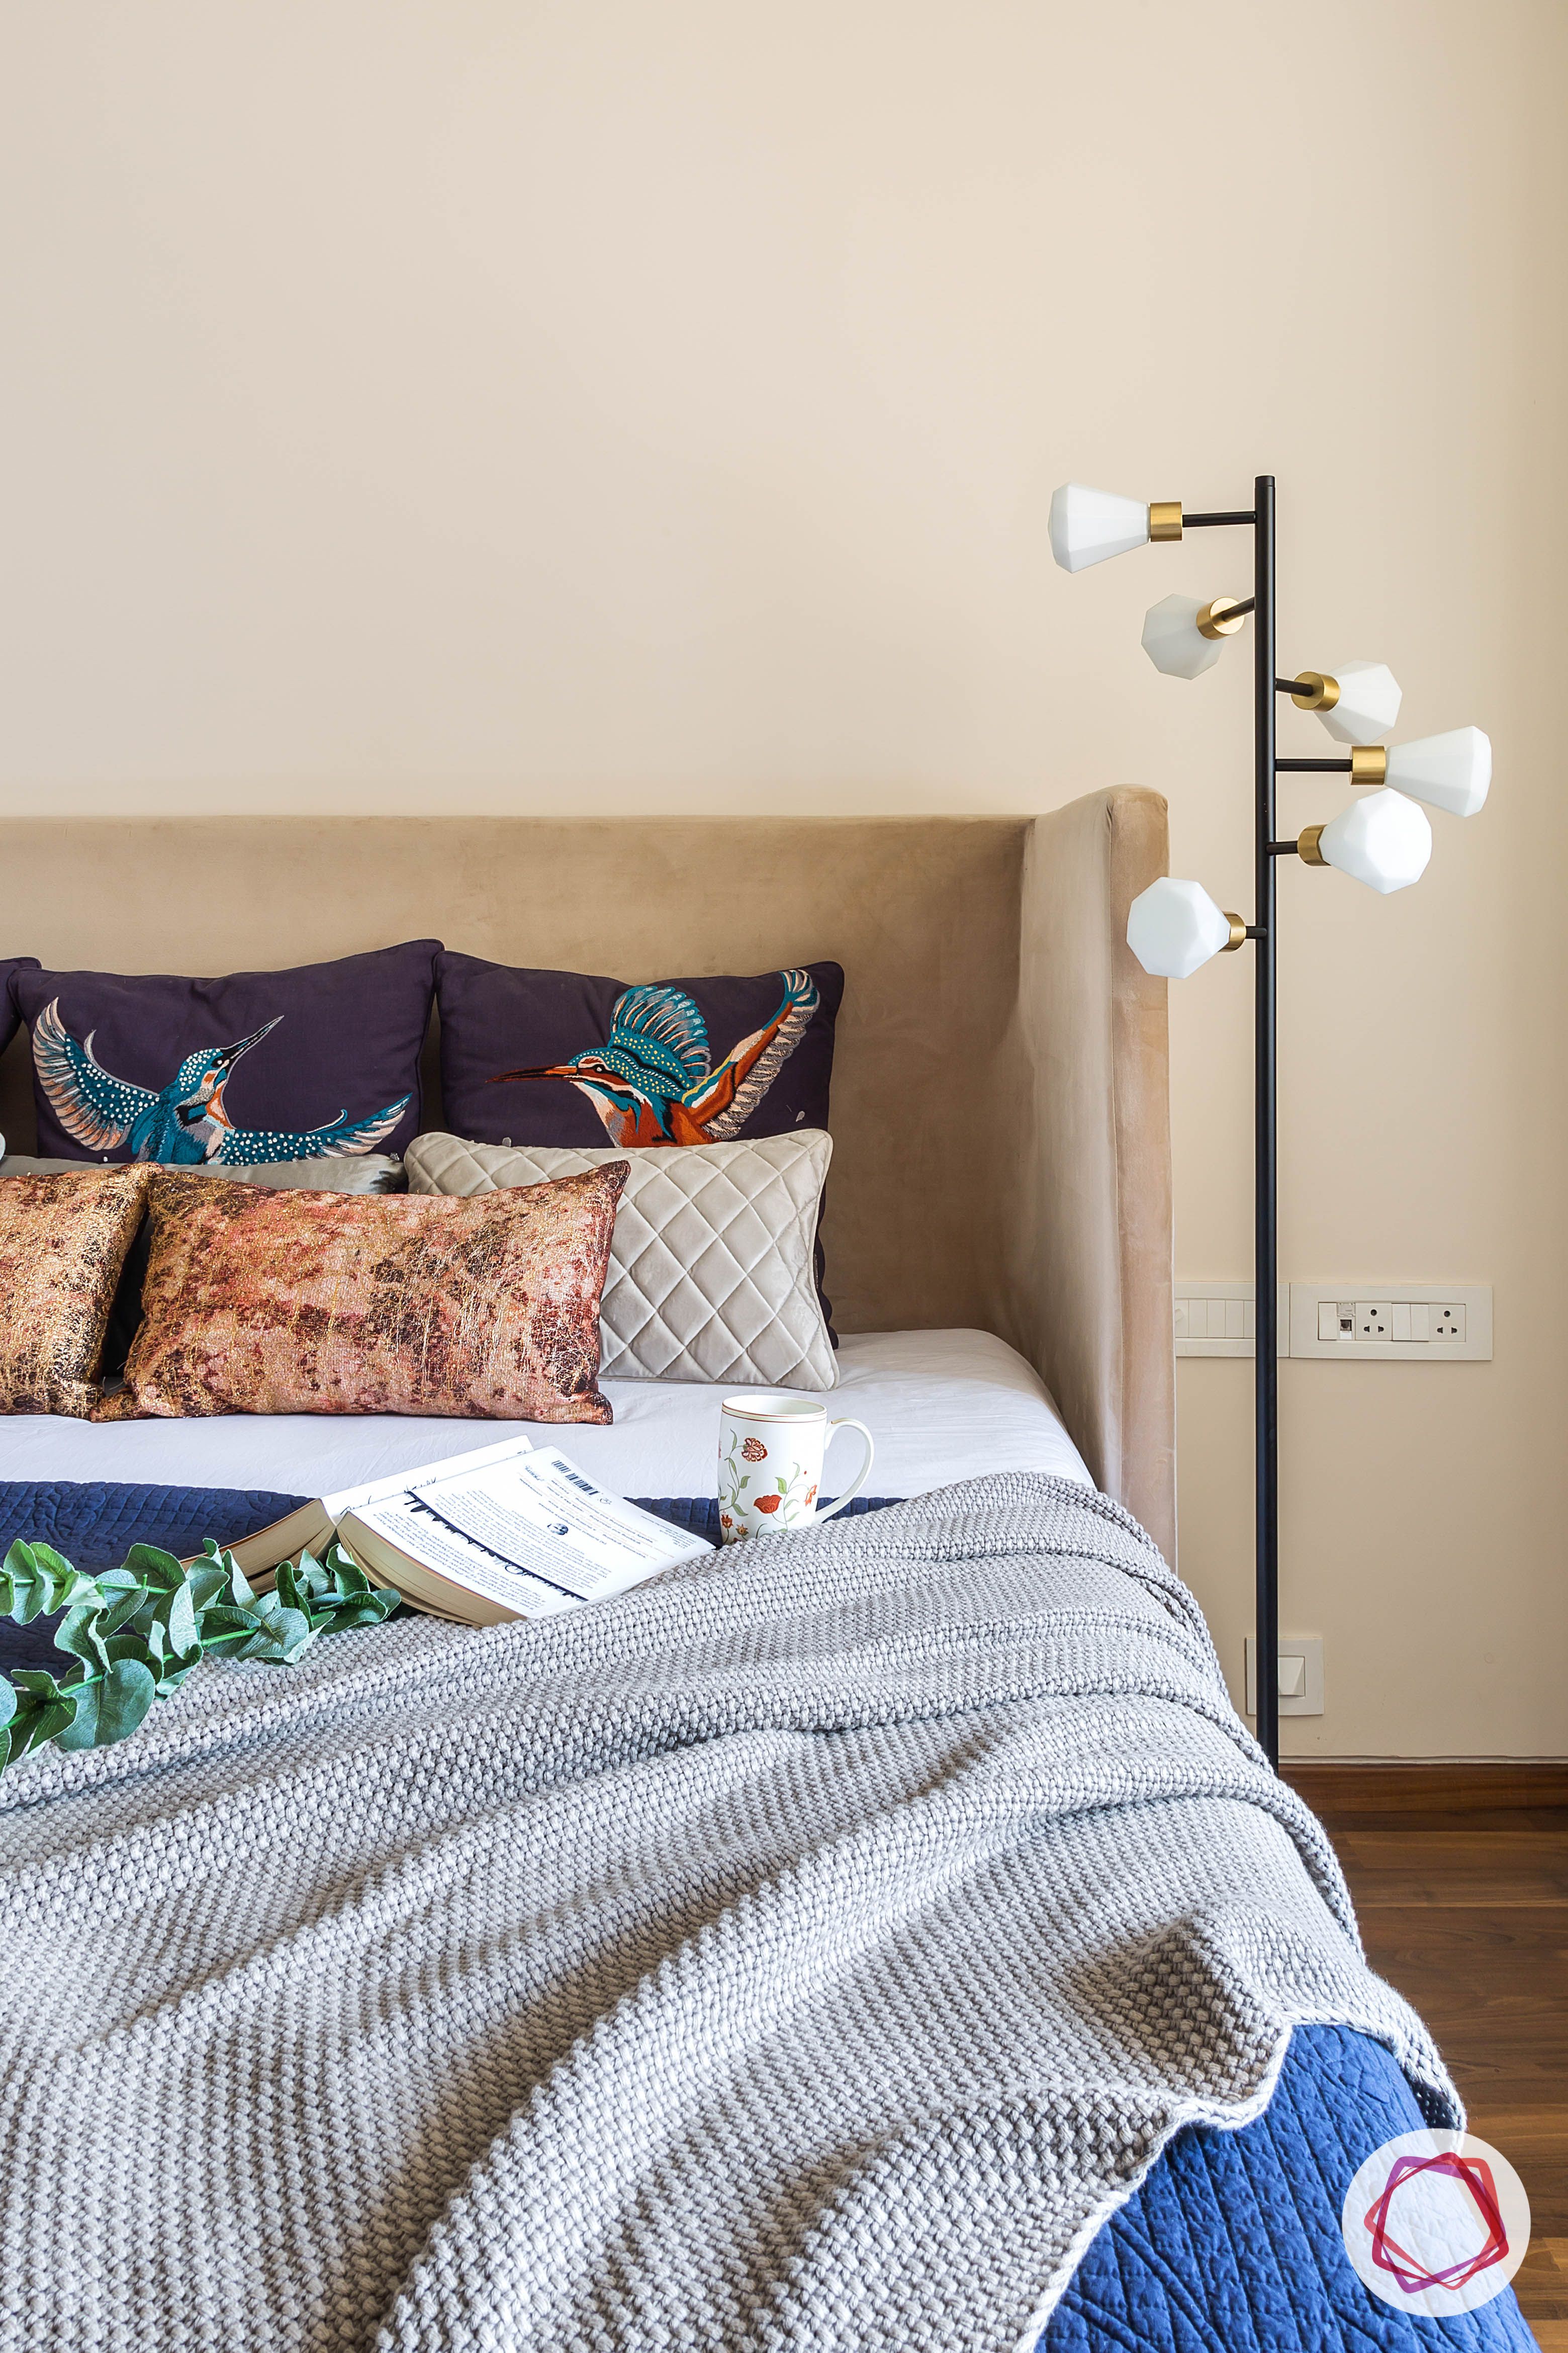 4bhk house plan-guest room designs-upholstered bed-wooden flooring-floor lamp-industrial lights